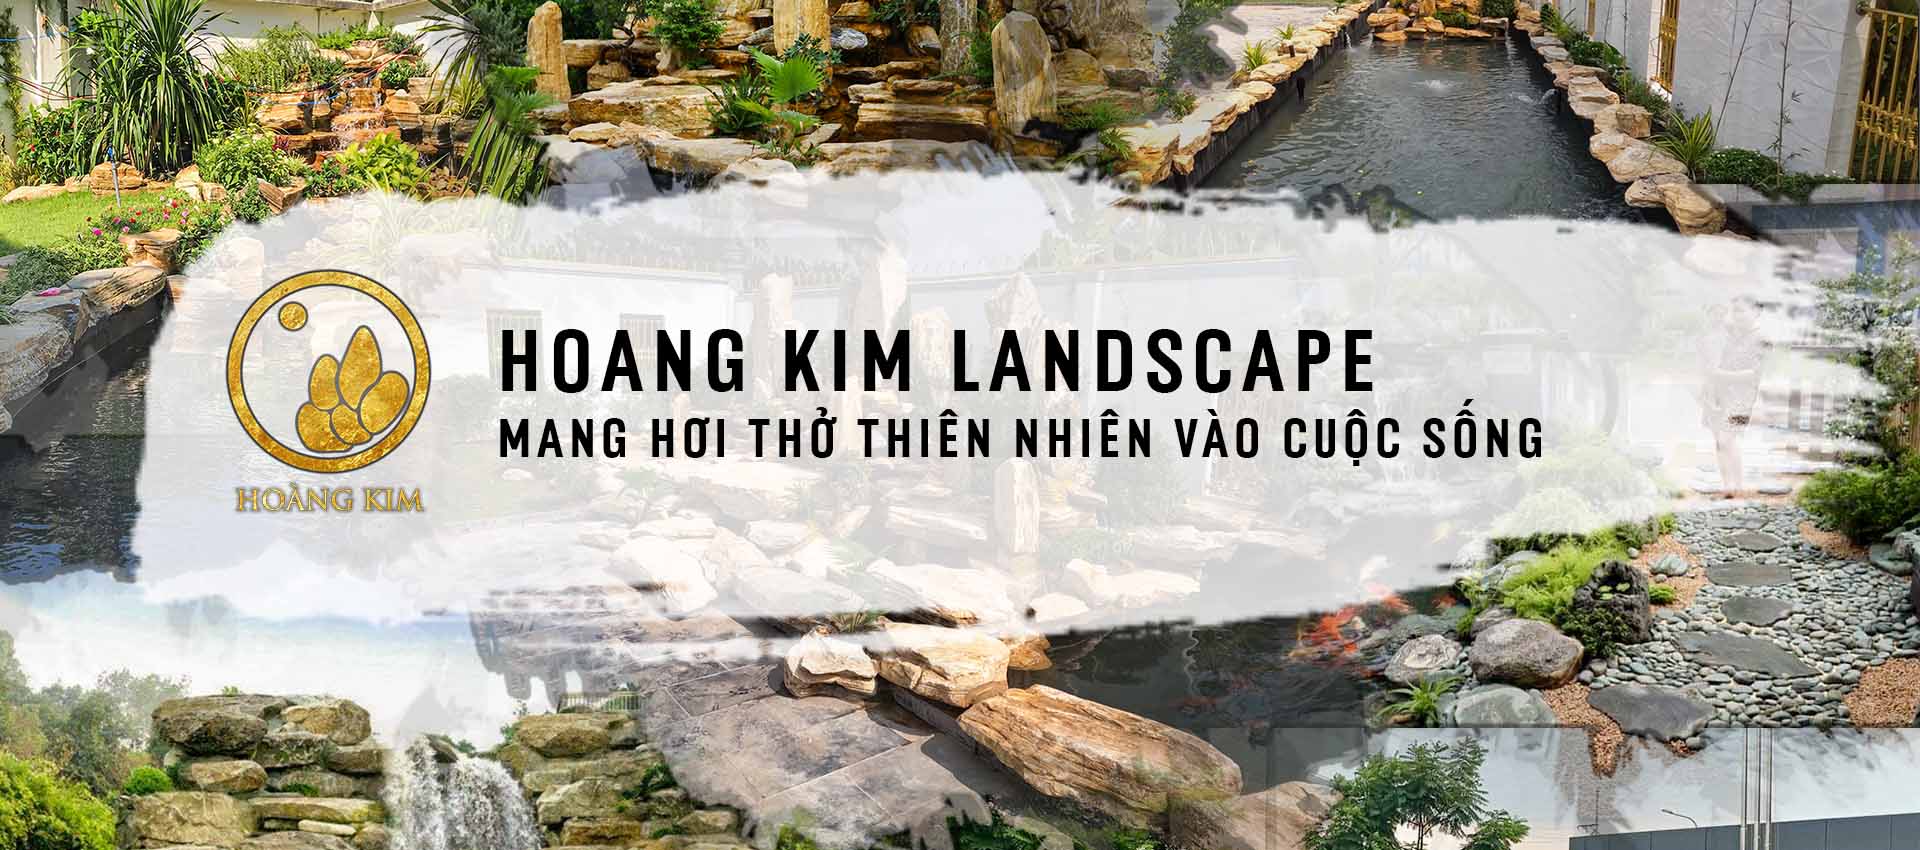 Hoàng Kim landscape